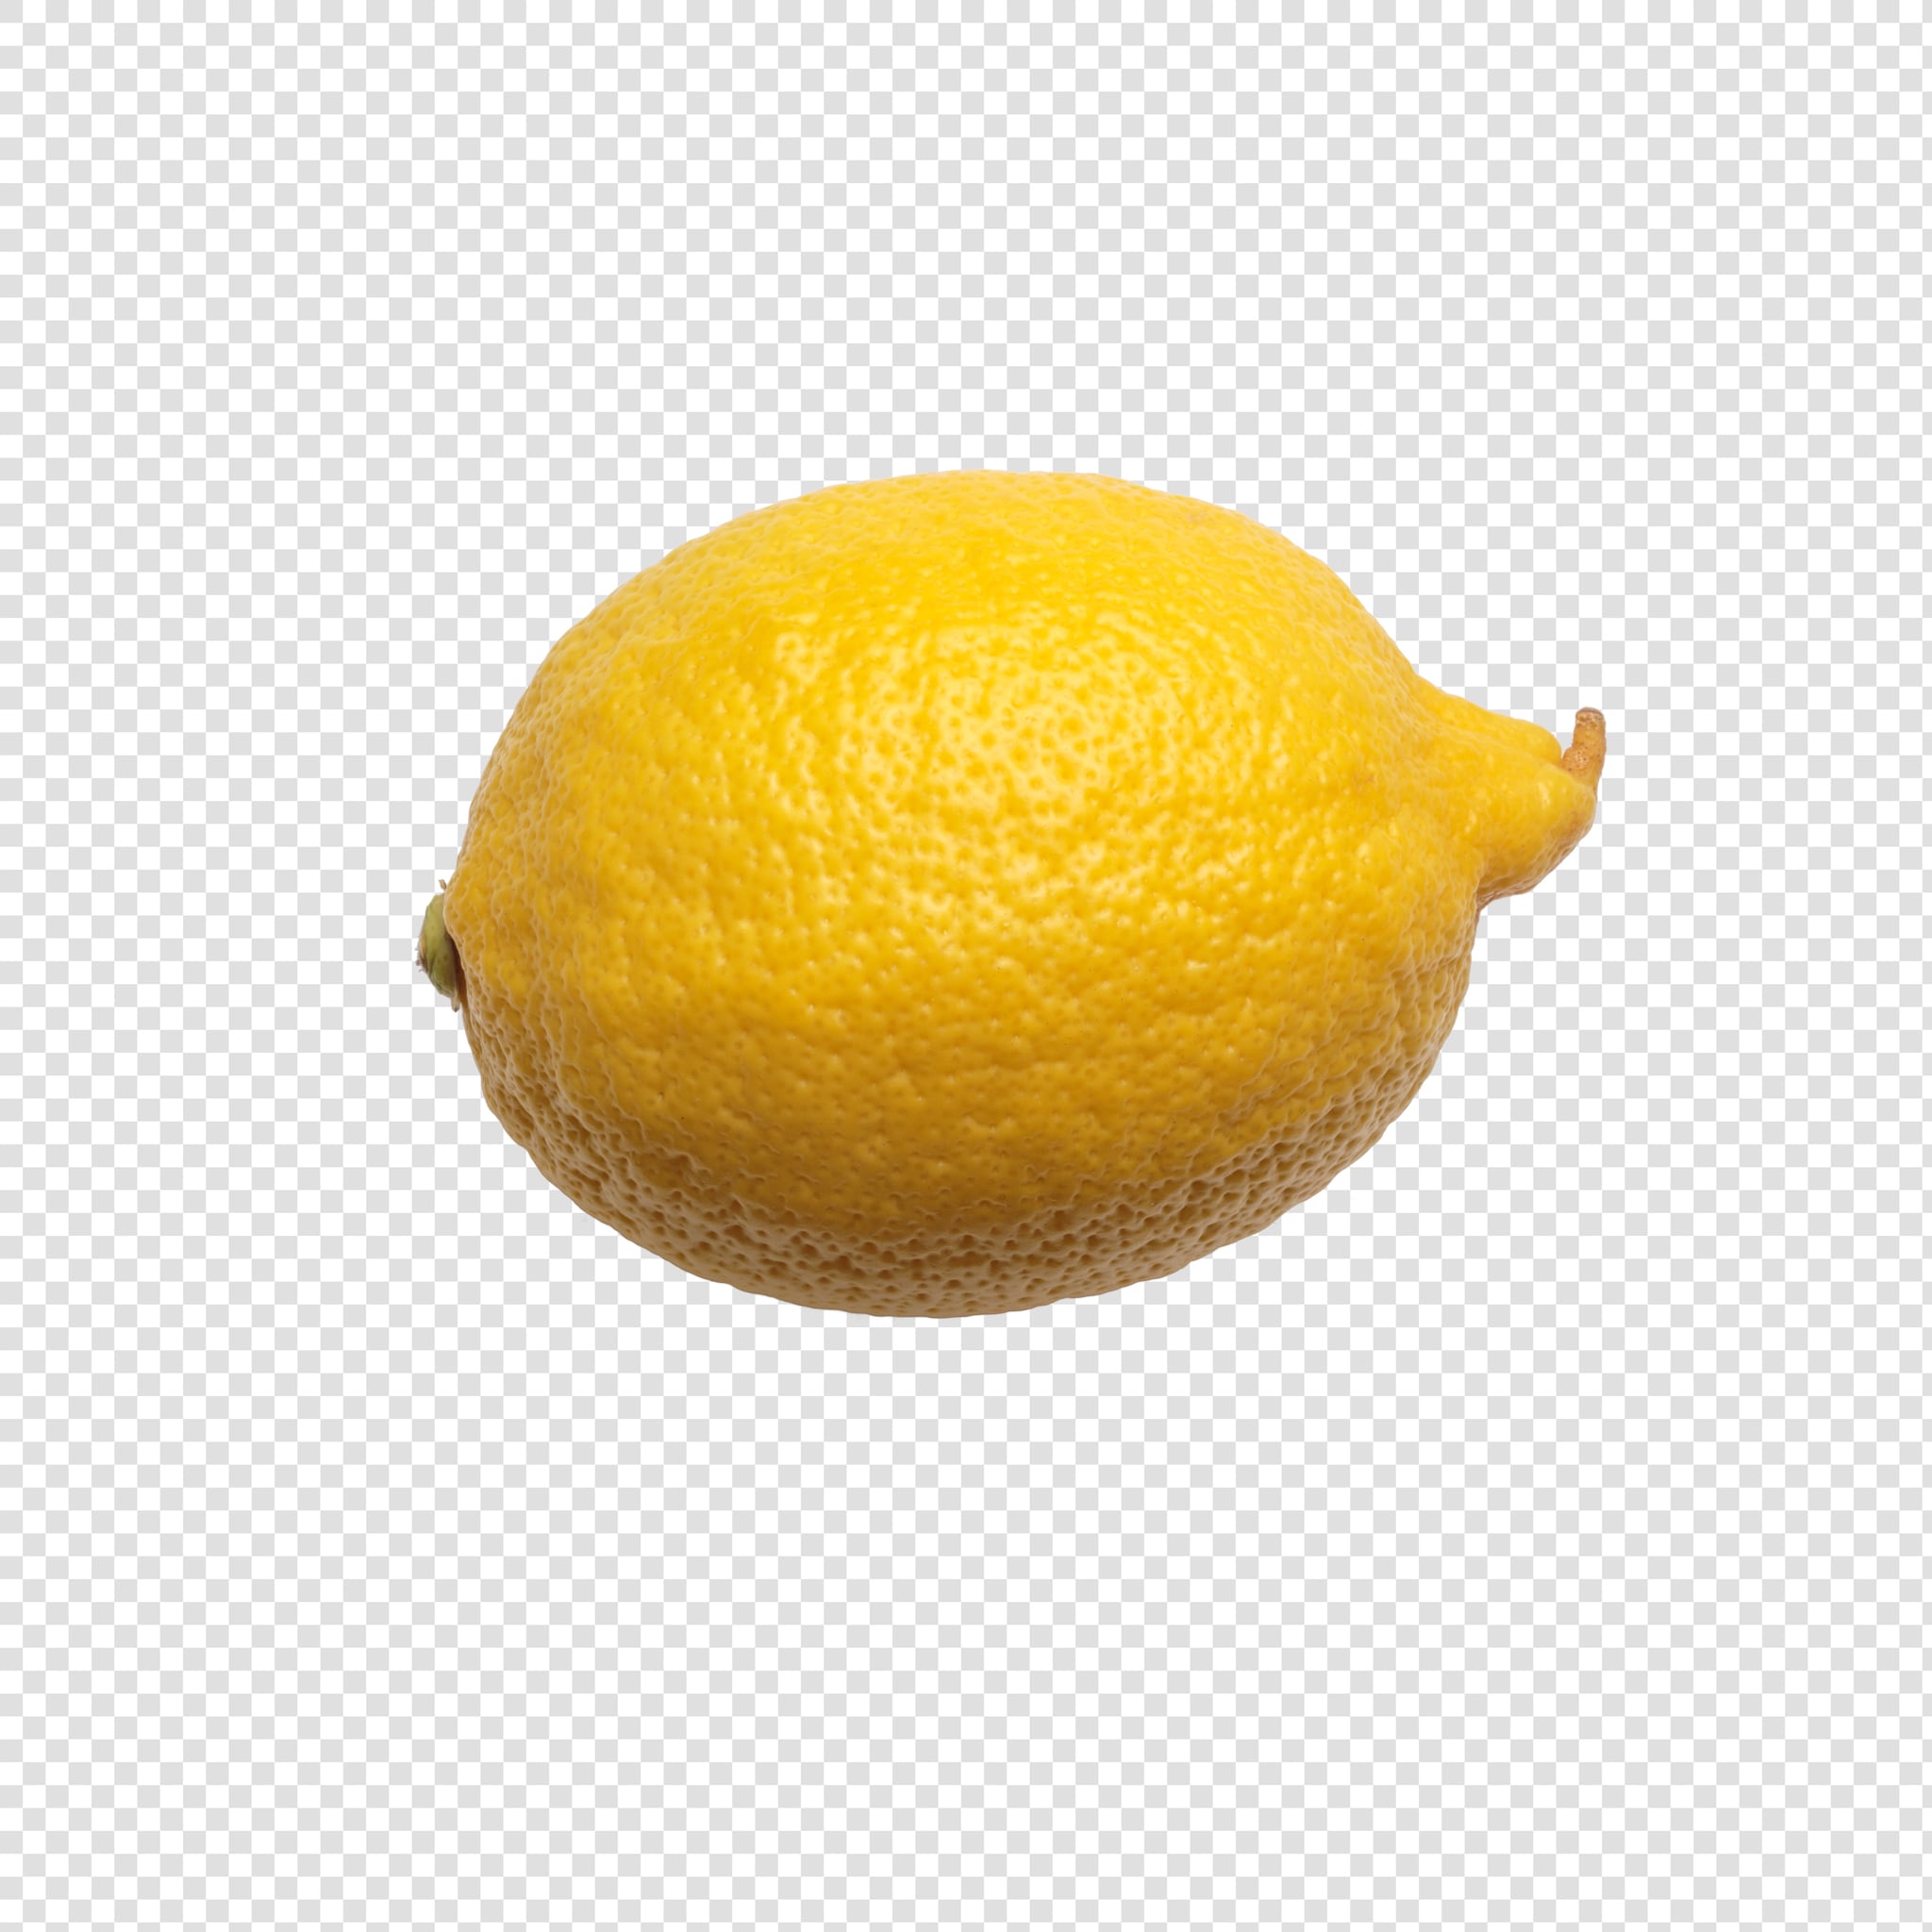 Lemon image with transparent background